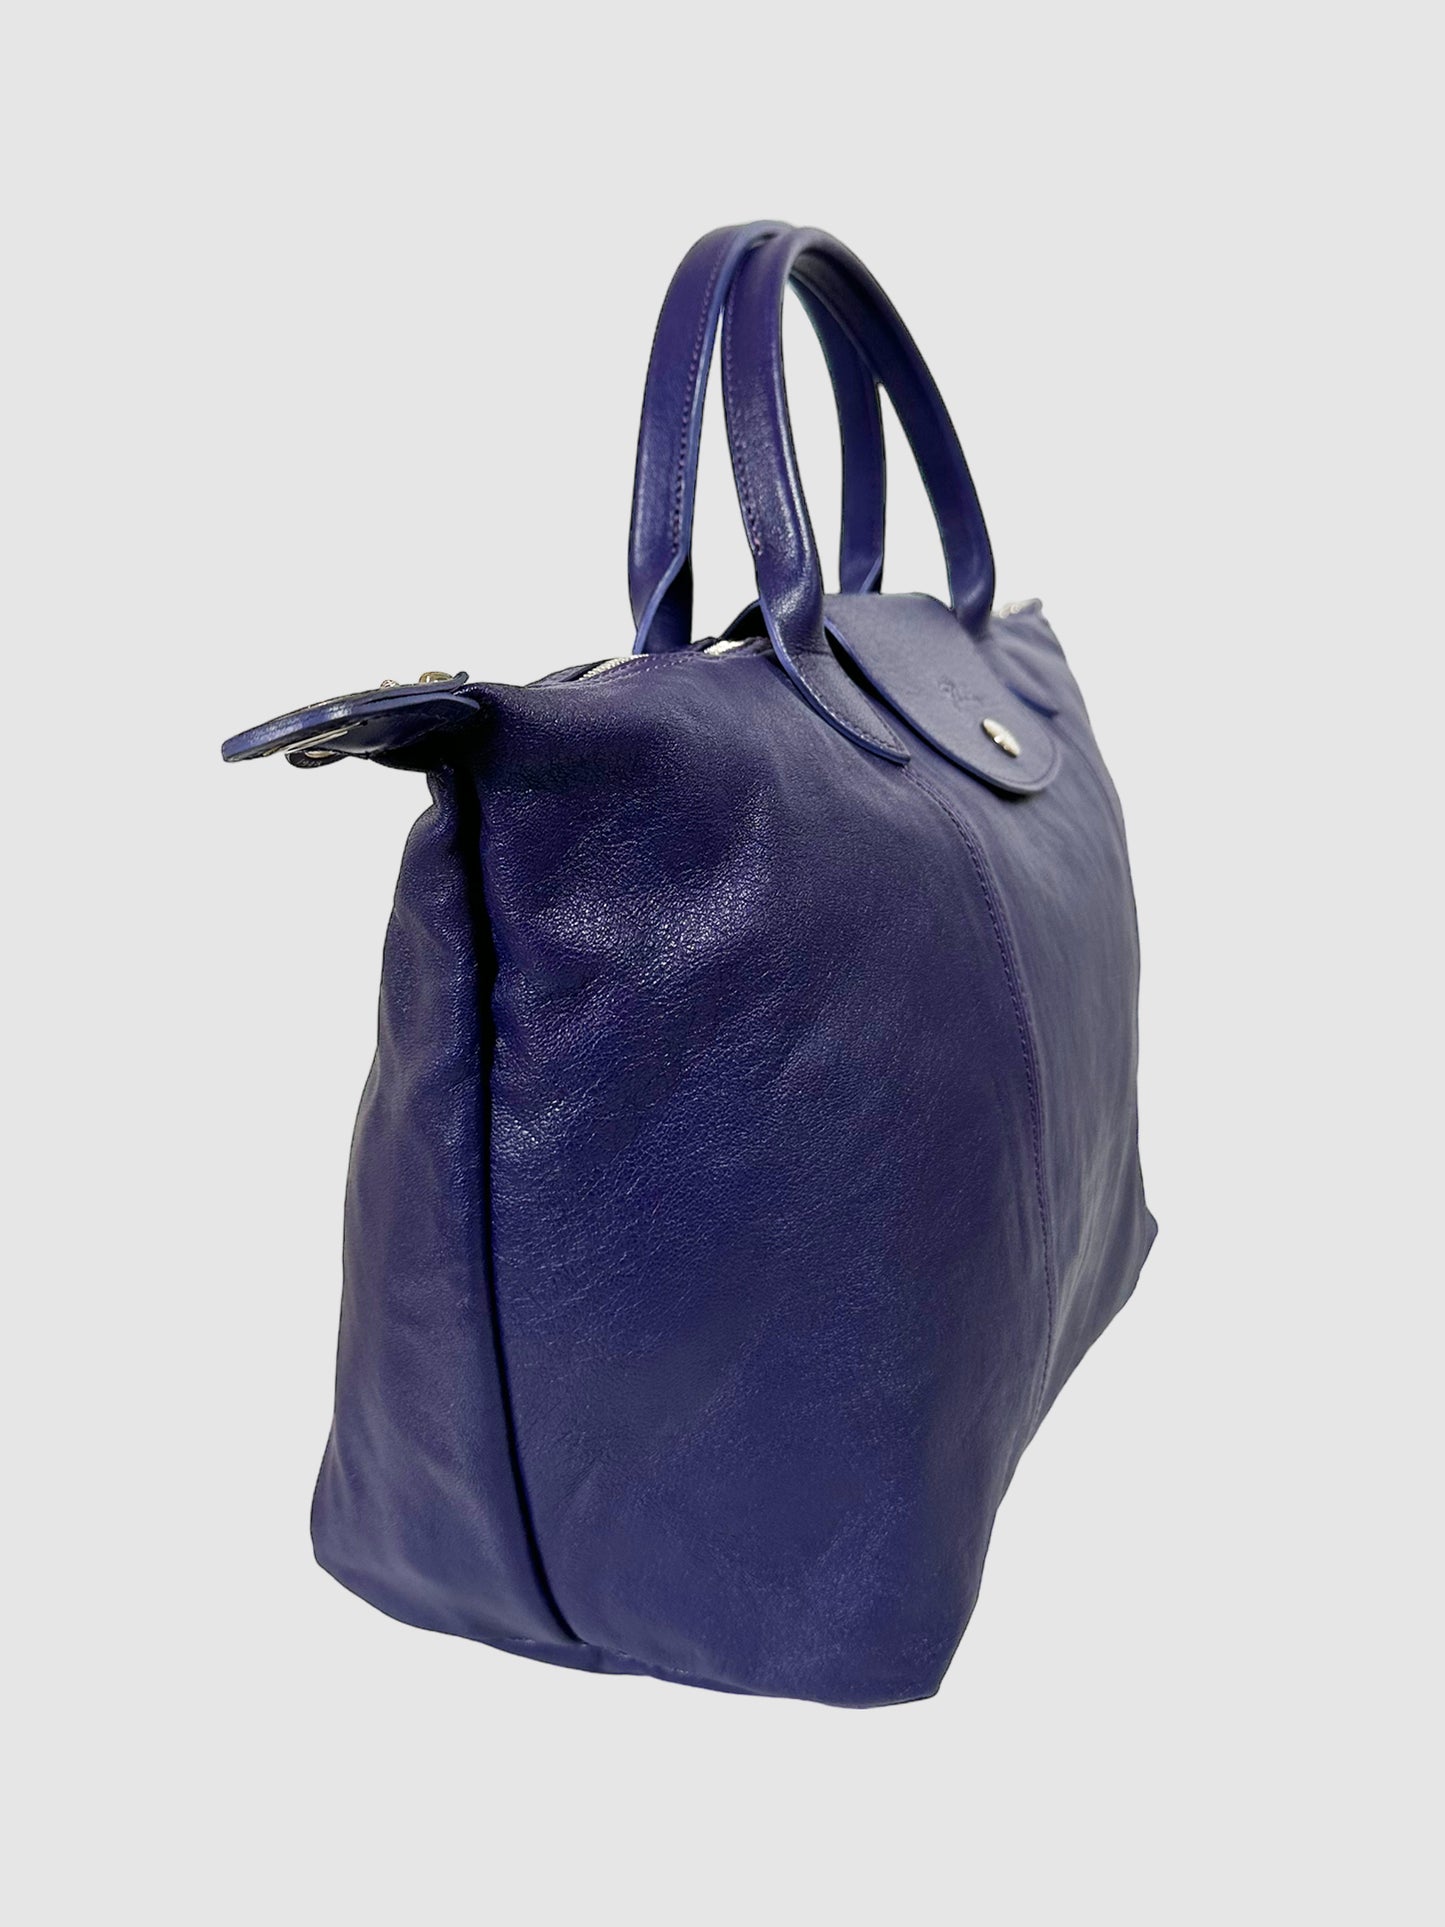 Longchamp Le Pliage Leather Tote Bag